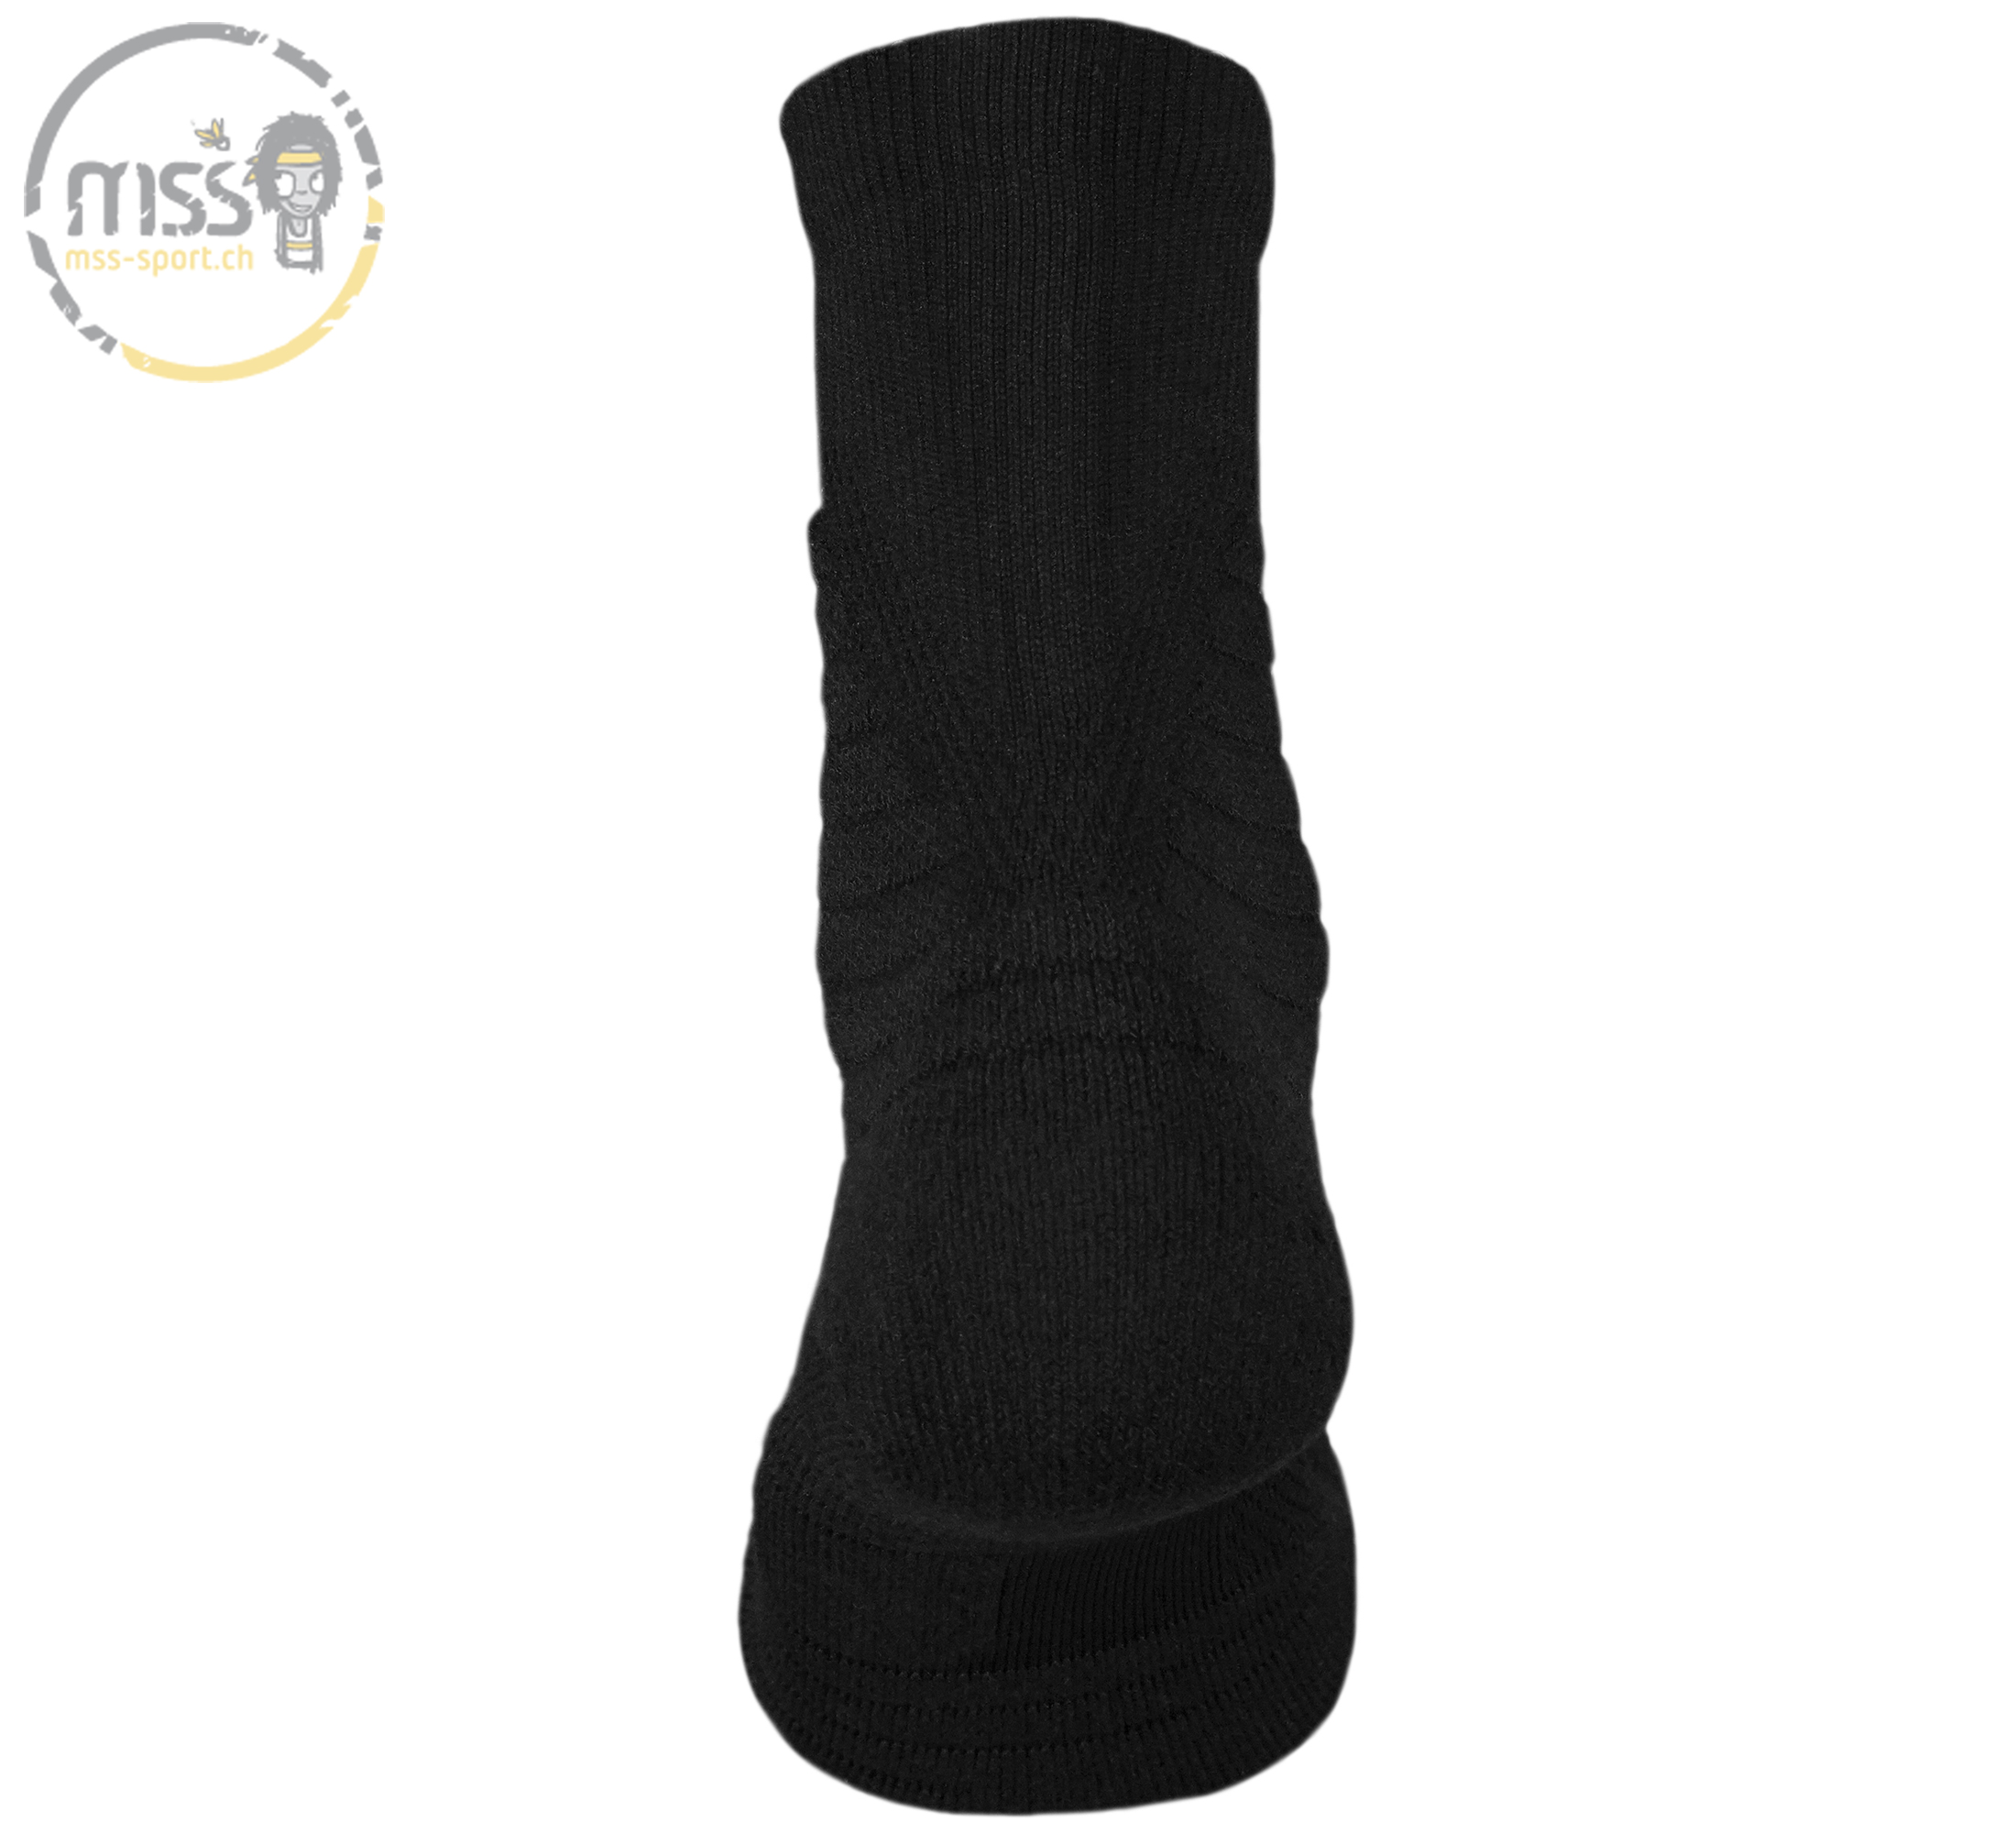 mss-socks Smash 5500 mid black